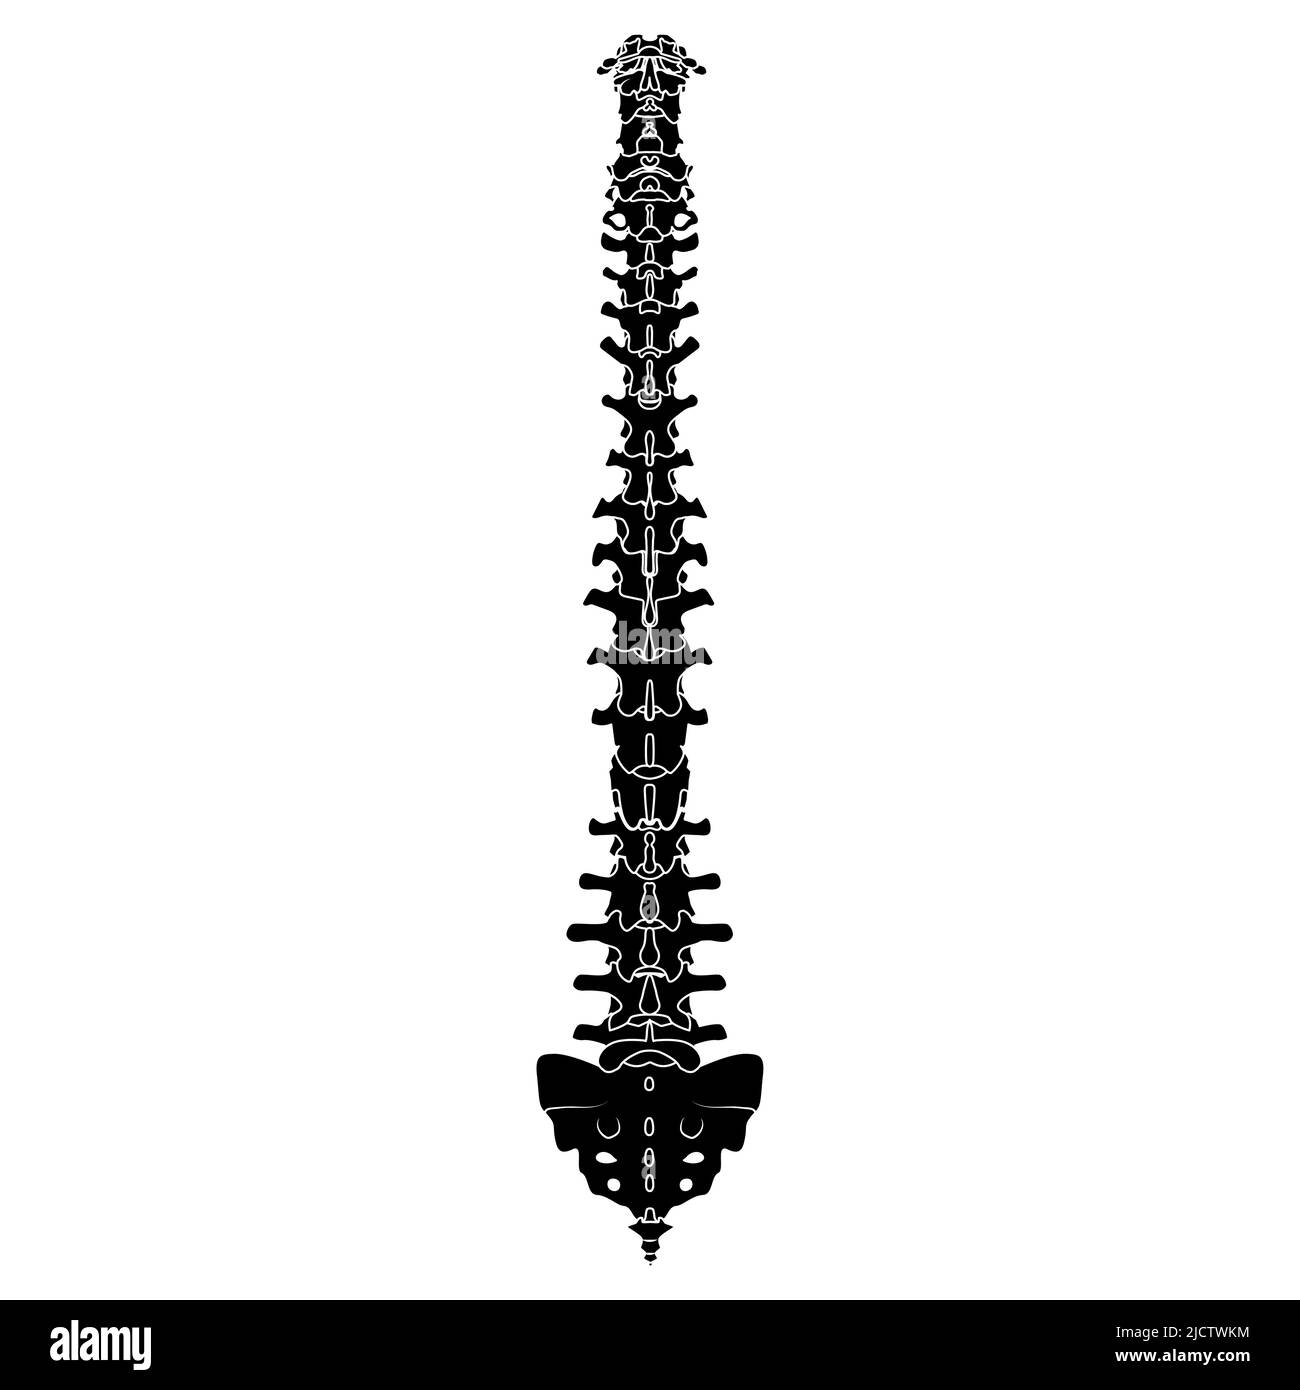 Skeleton Human Vertebral column silhouette spine body bones - sacrum, vertebrae, coccyx back Posterior dorsal view flat black color concept Vector illustration of anatomy isolated on white background Stock Vector